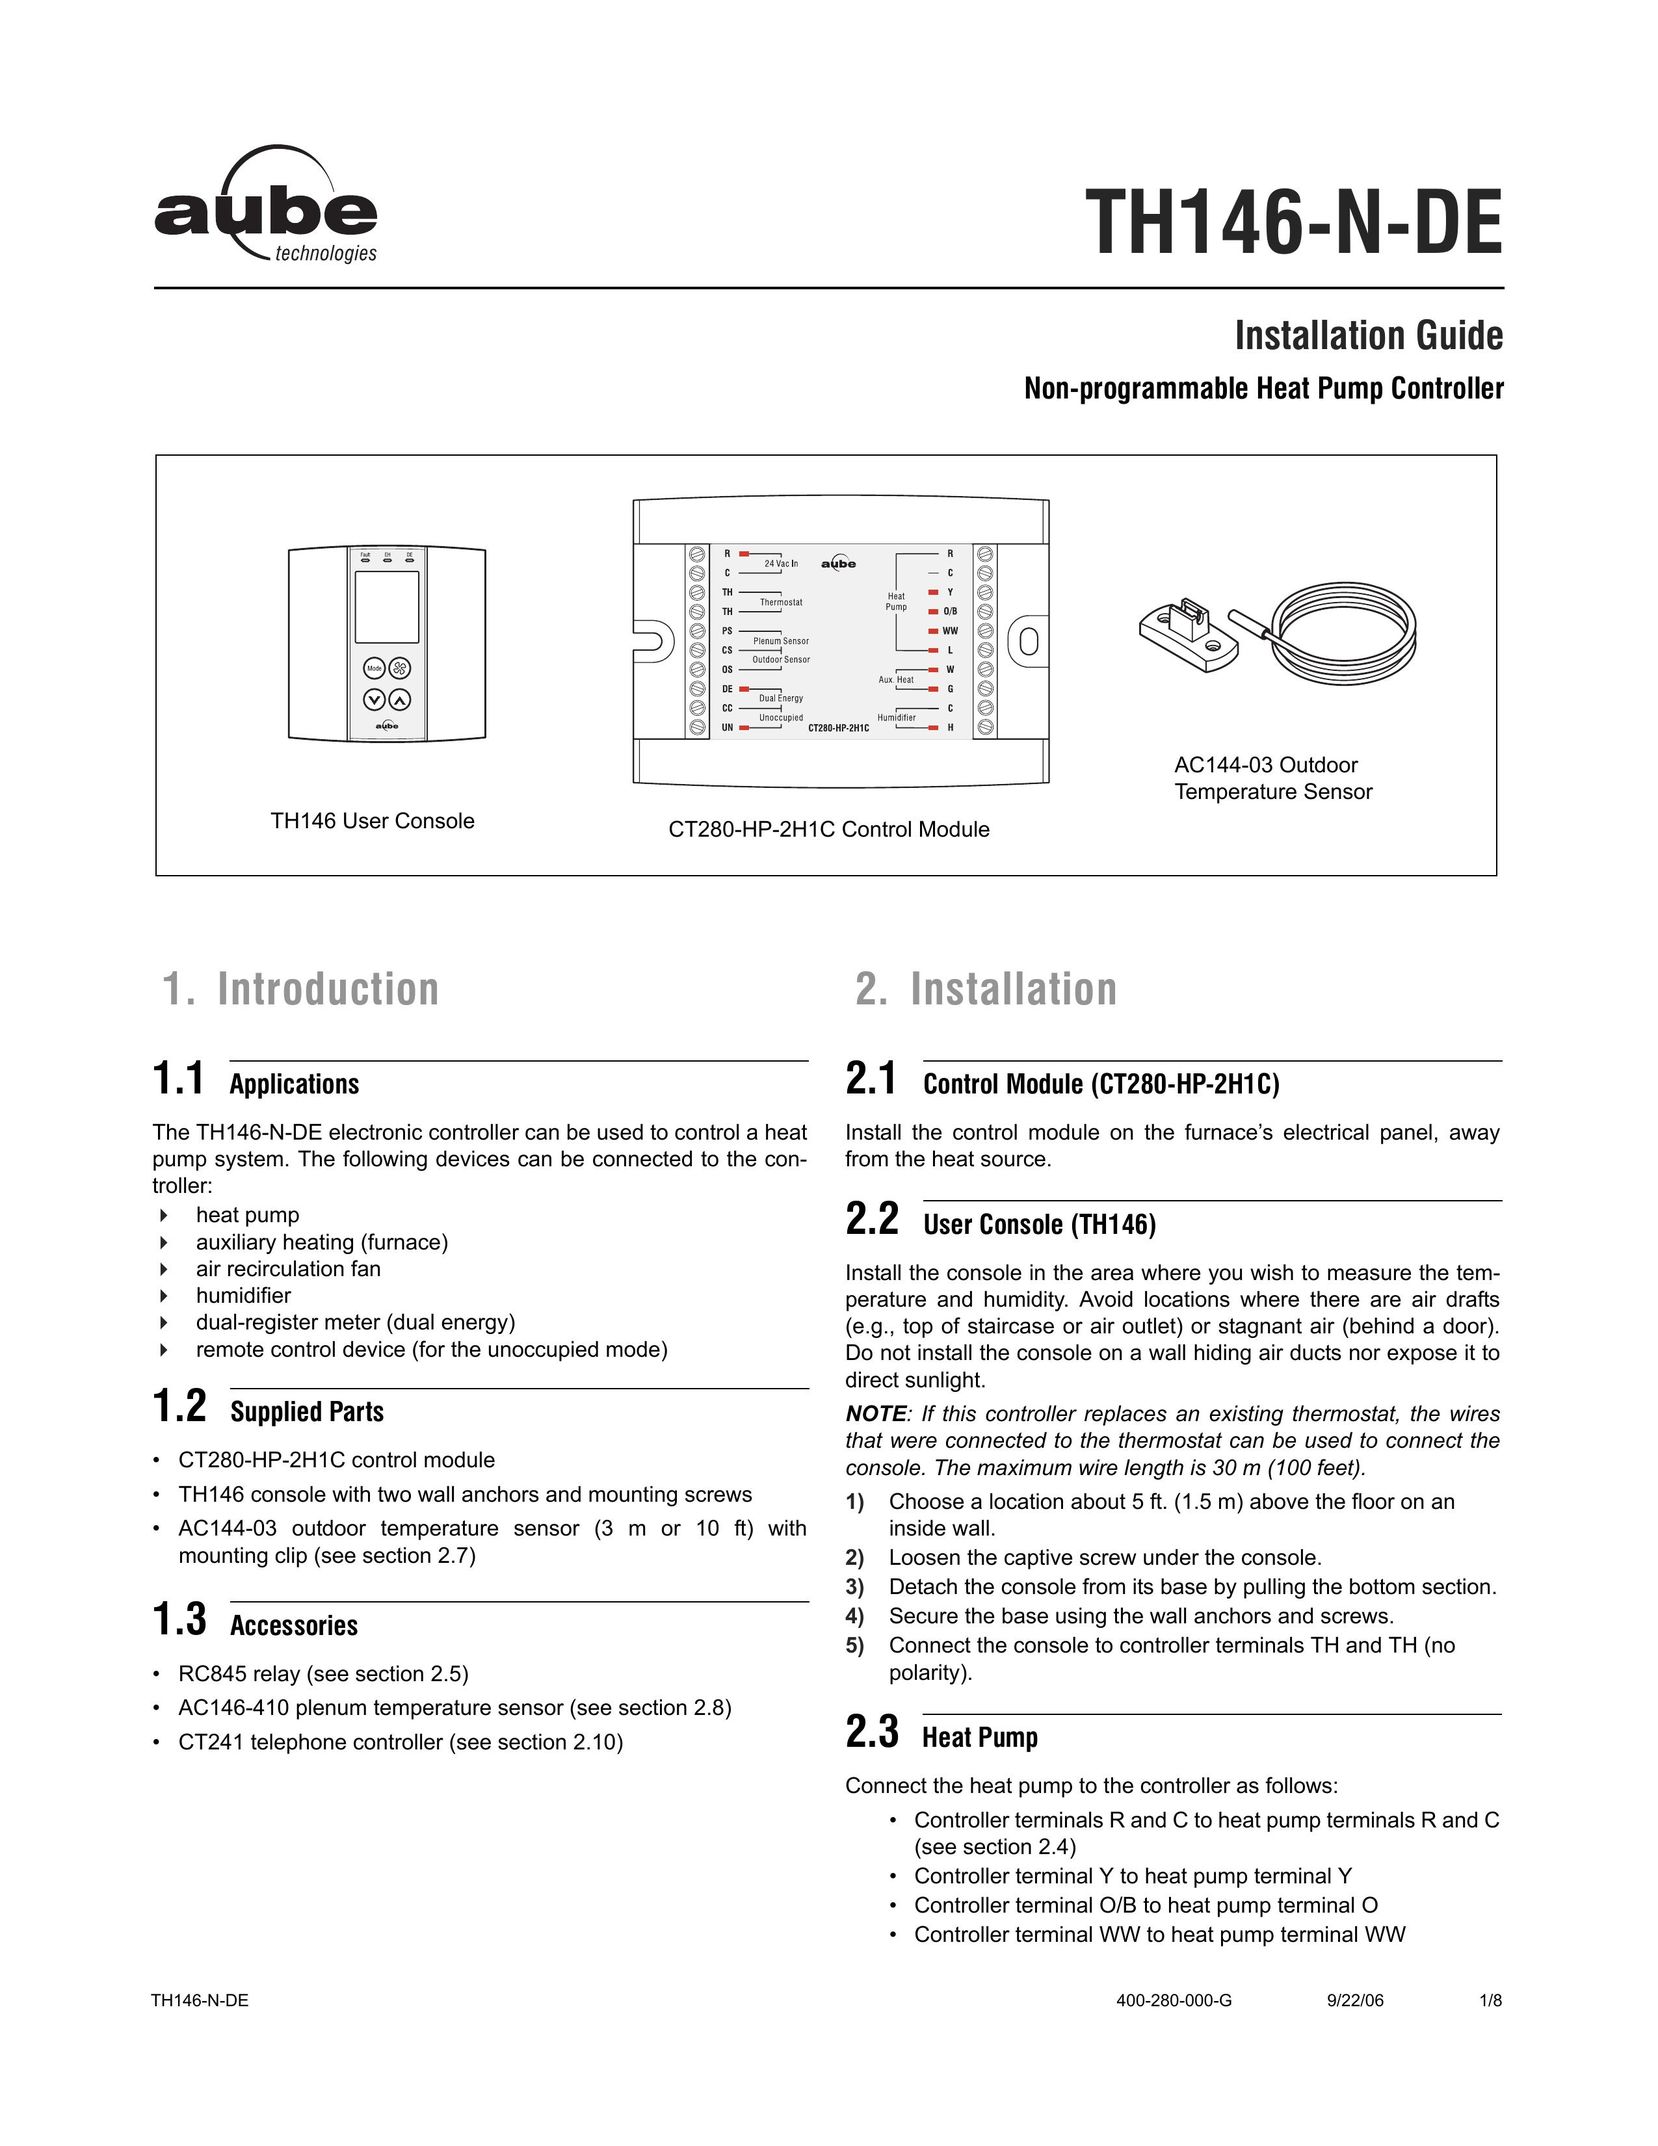 Aube Technologies TH146-N-DE Electric Heater User Manual